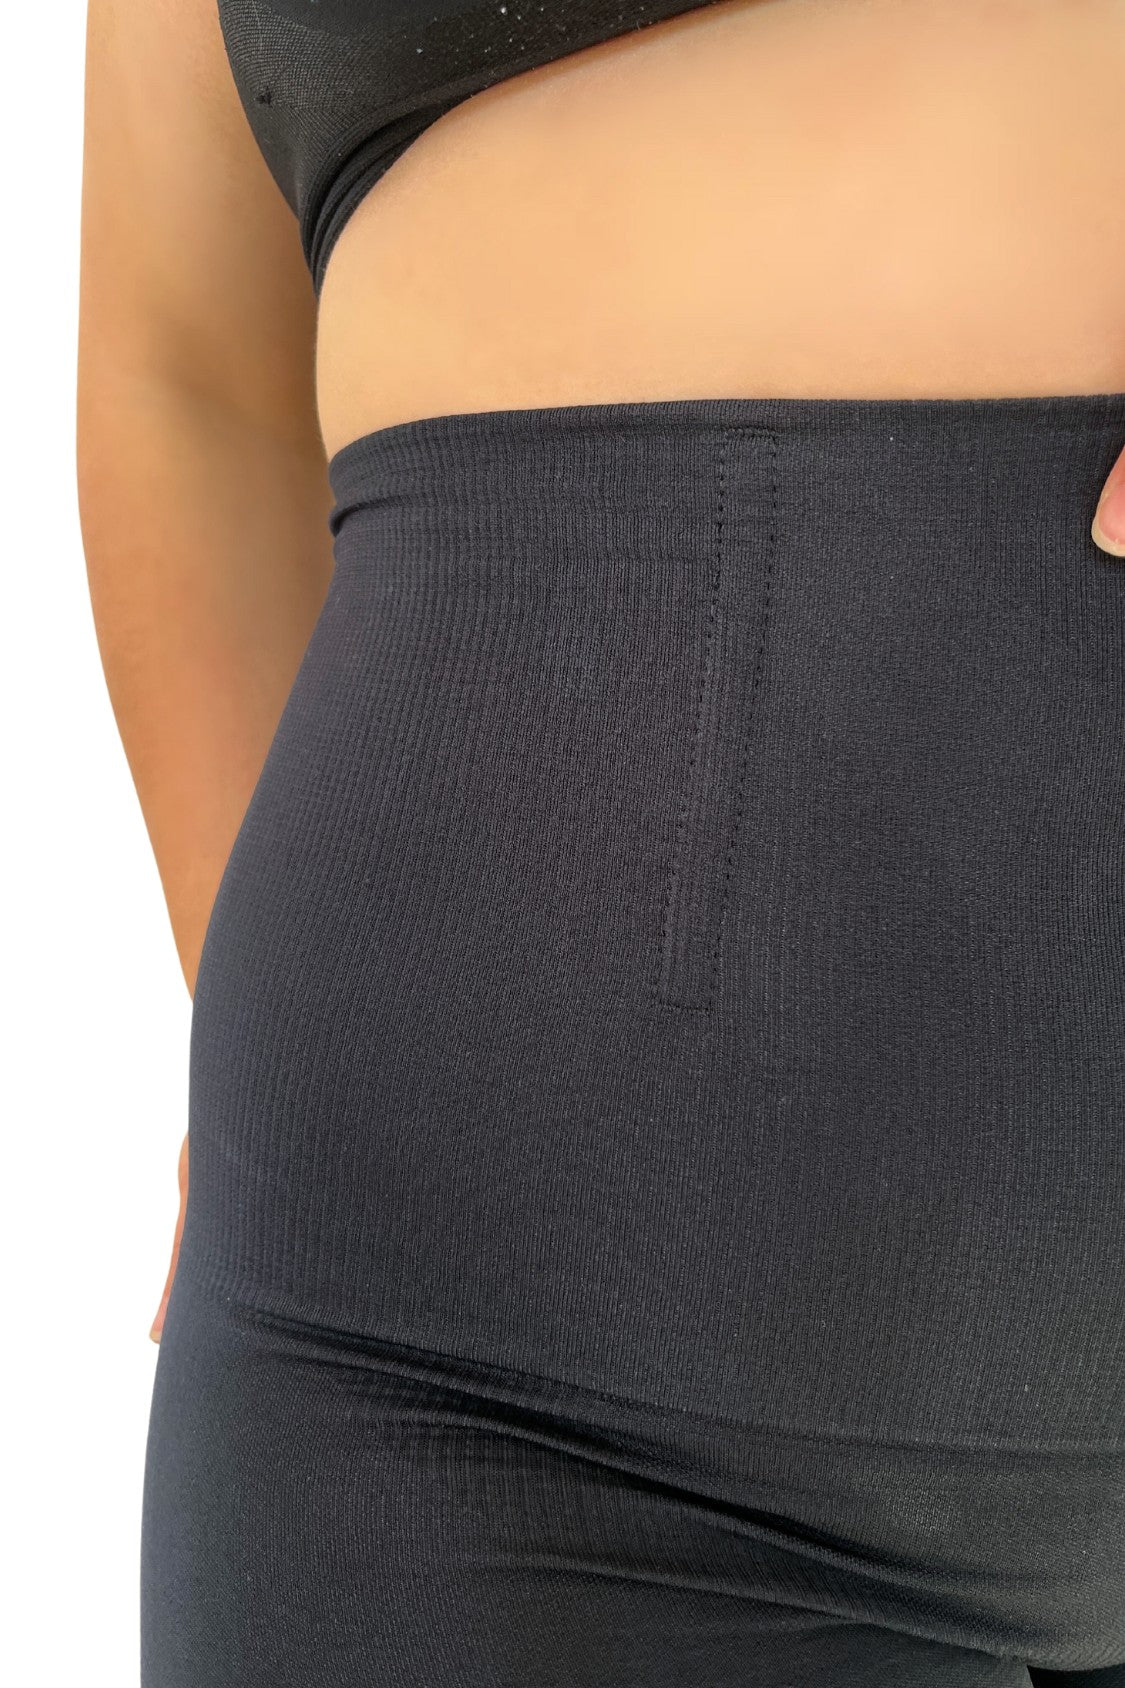 Ultimate Tummy Control Shorts - Black